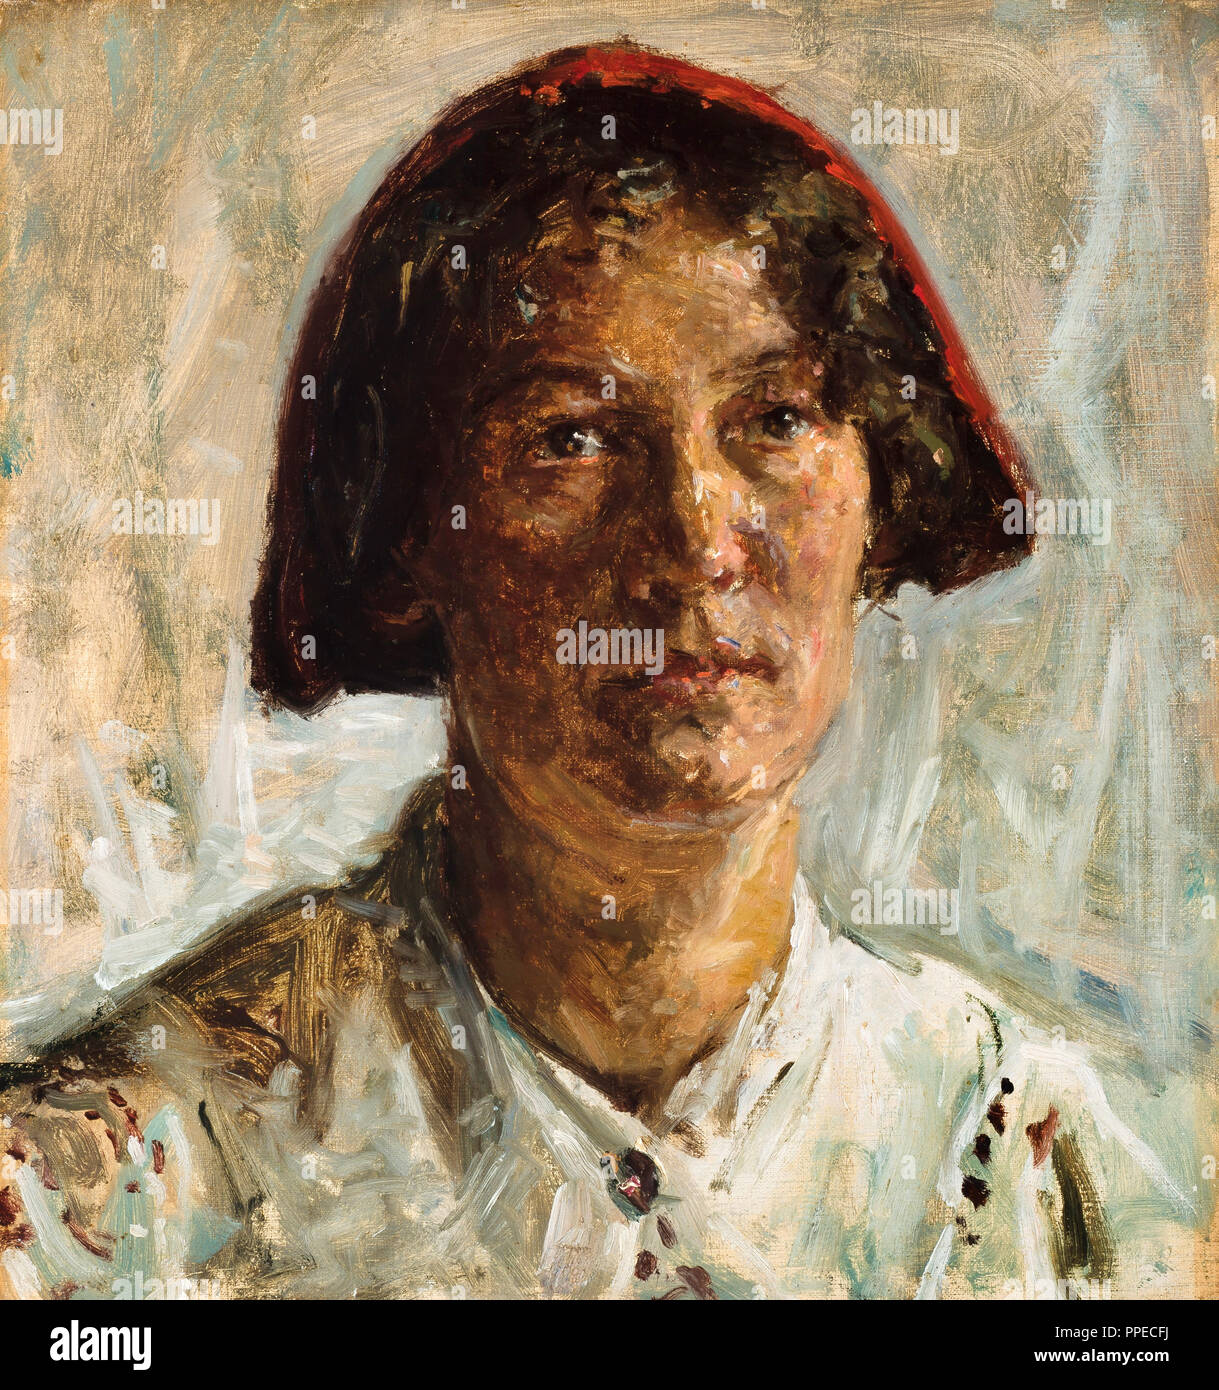 Viggo Johansen - Alice Nordin 1903 Óleo sobre lienzo. Museo Skagens, Skagen, Dinamarca. Foto de stock